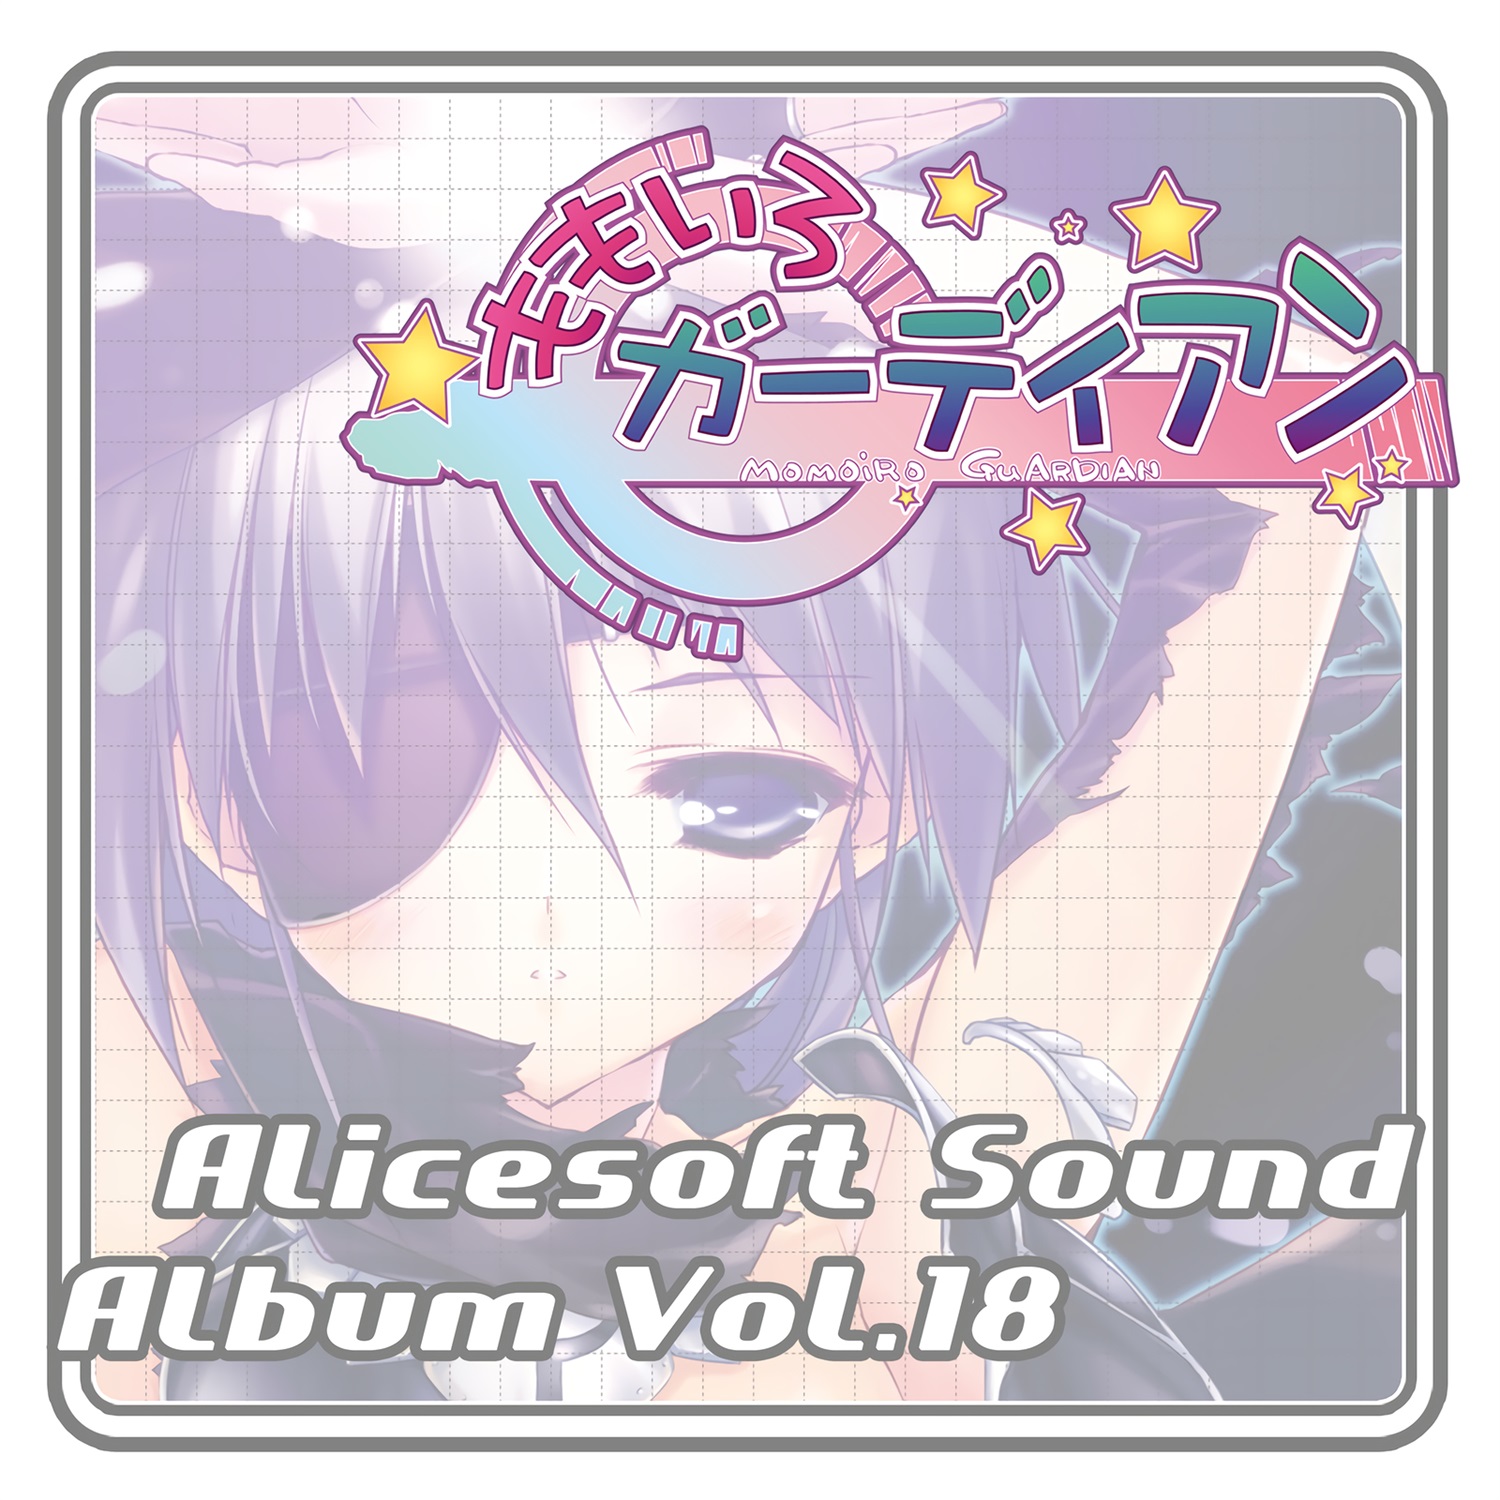 【WAV】アリスサウンドアルバム Vol.18 ももいろガーディアン／AliceSoft